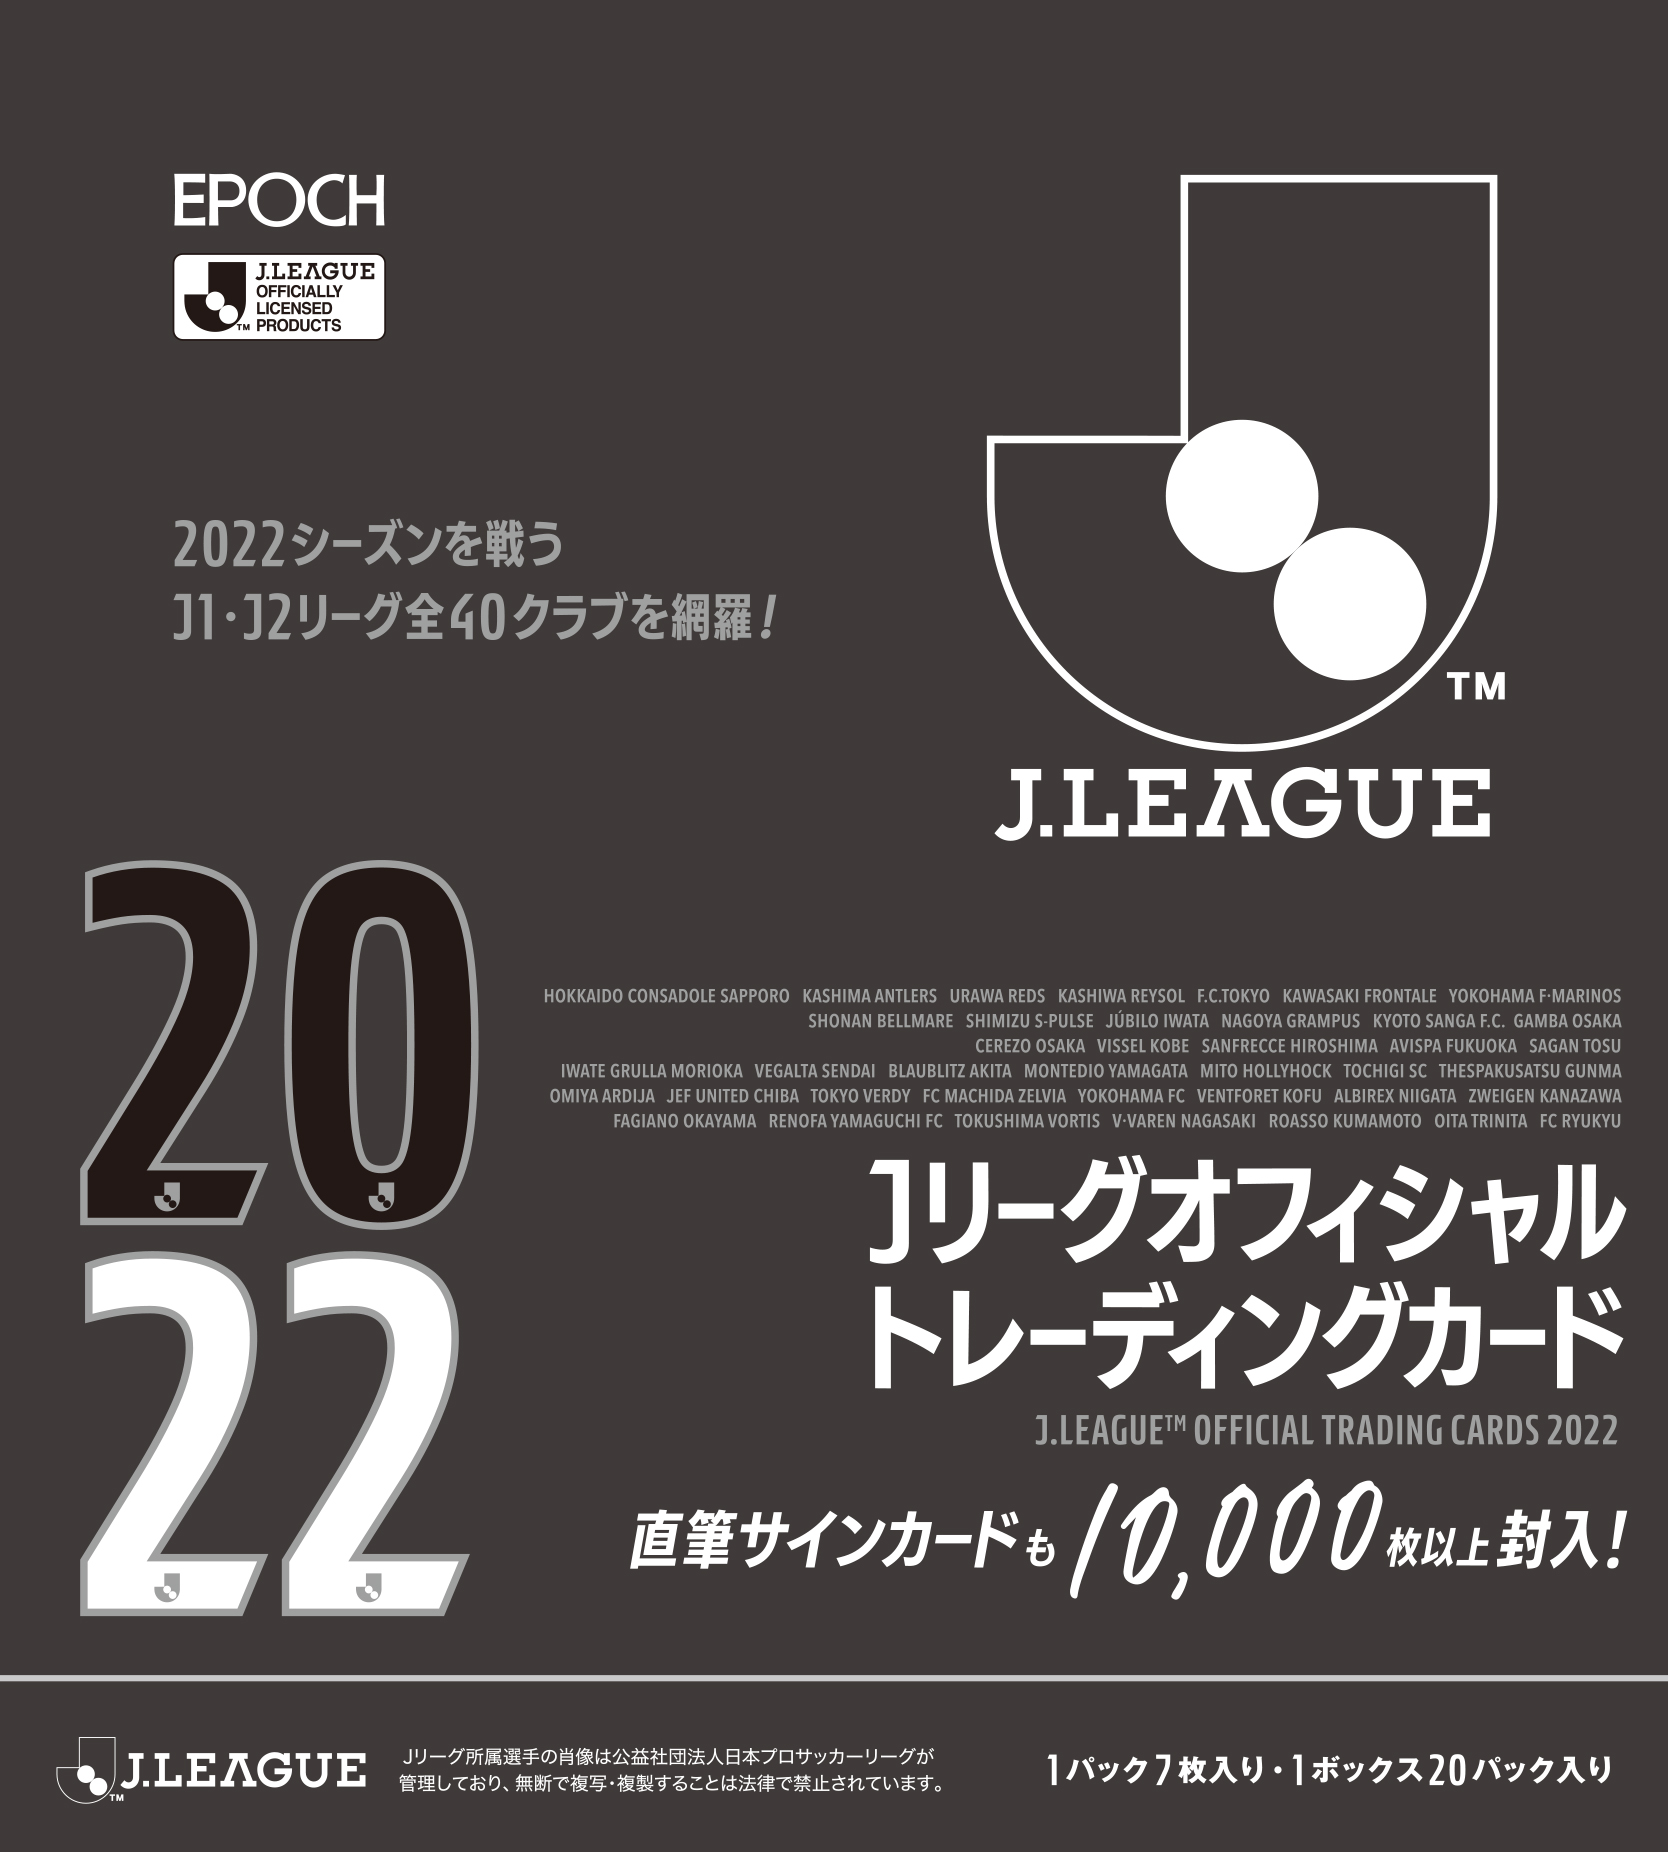 ⚽ EPOCH 2022 Jリーグオフィシャルトレーディングカード【製品情報 